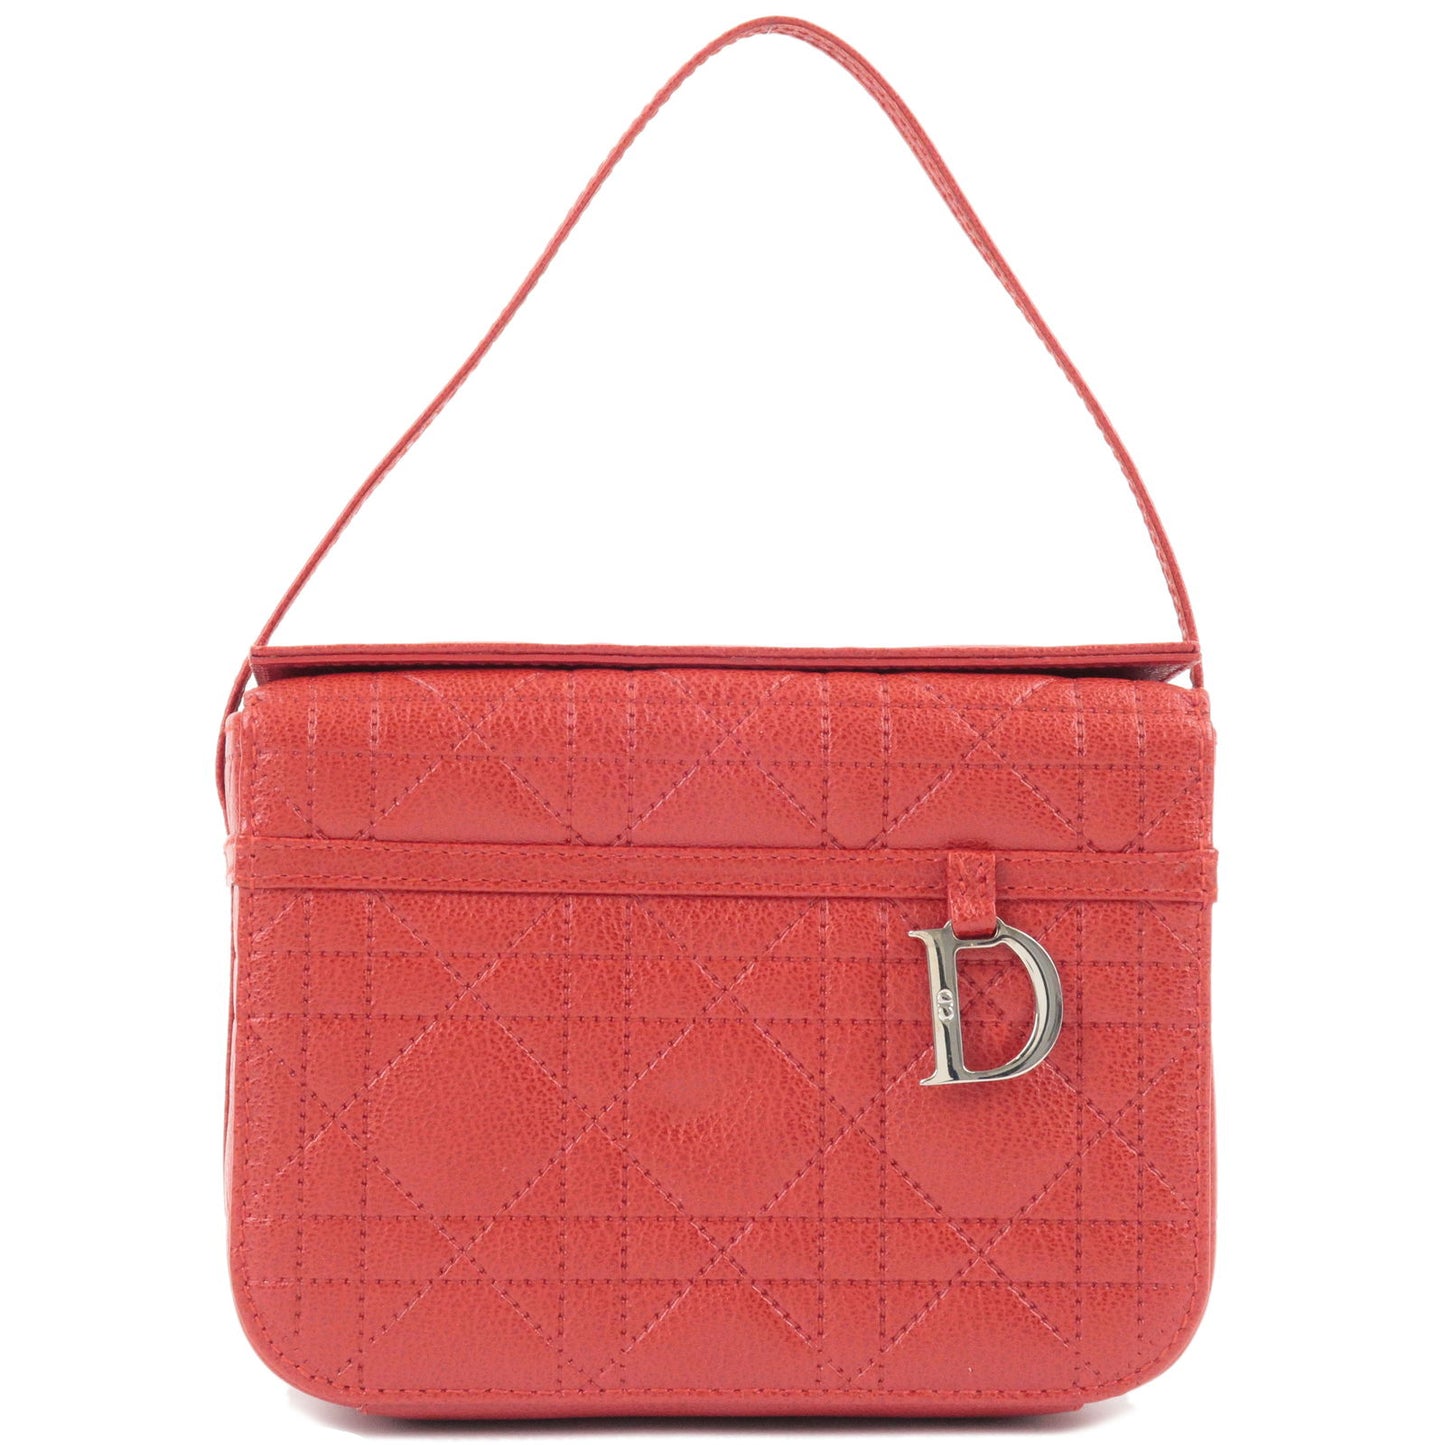 Christian-Dior-Cannage-Leather-Vanity-Bag-Mini-Bag-Red